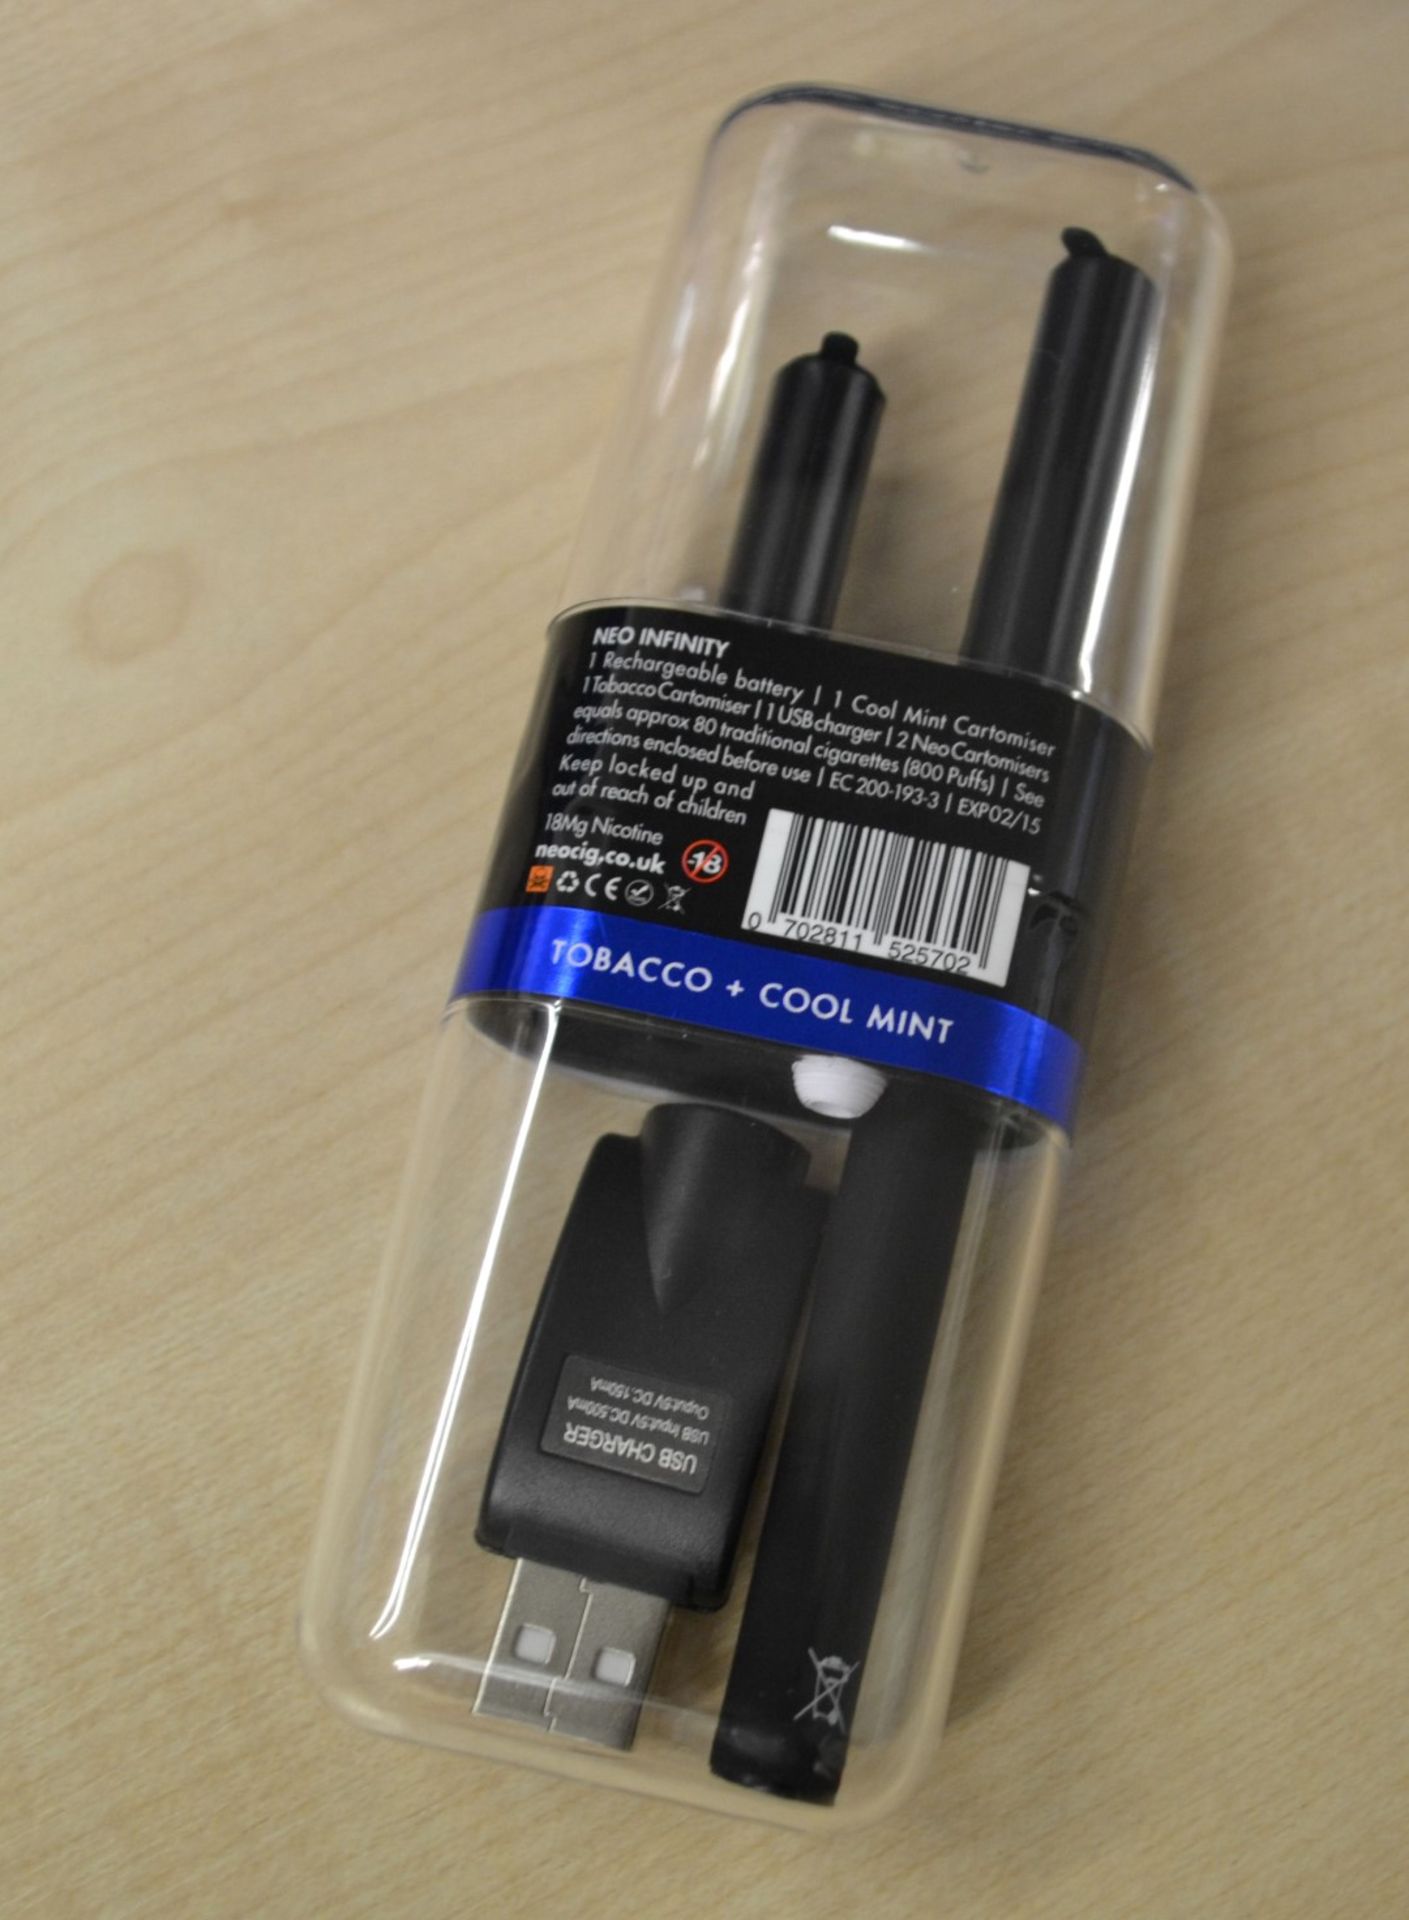 12 x Neo E-Cigarettes Infinity Starter Packs - New & Sealed Stock - CL185 - Ref: DRTISP - Location: - Image 7 of 7